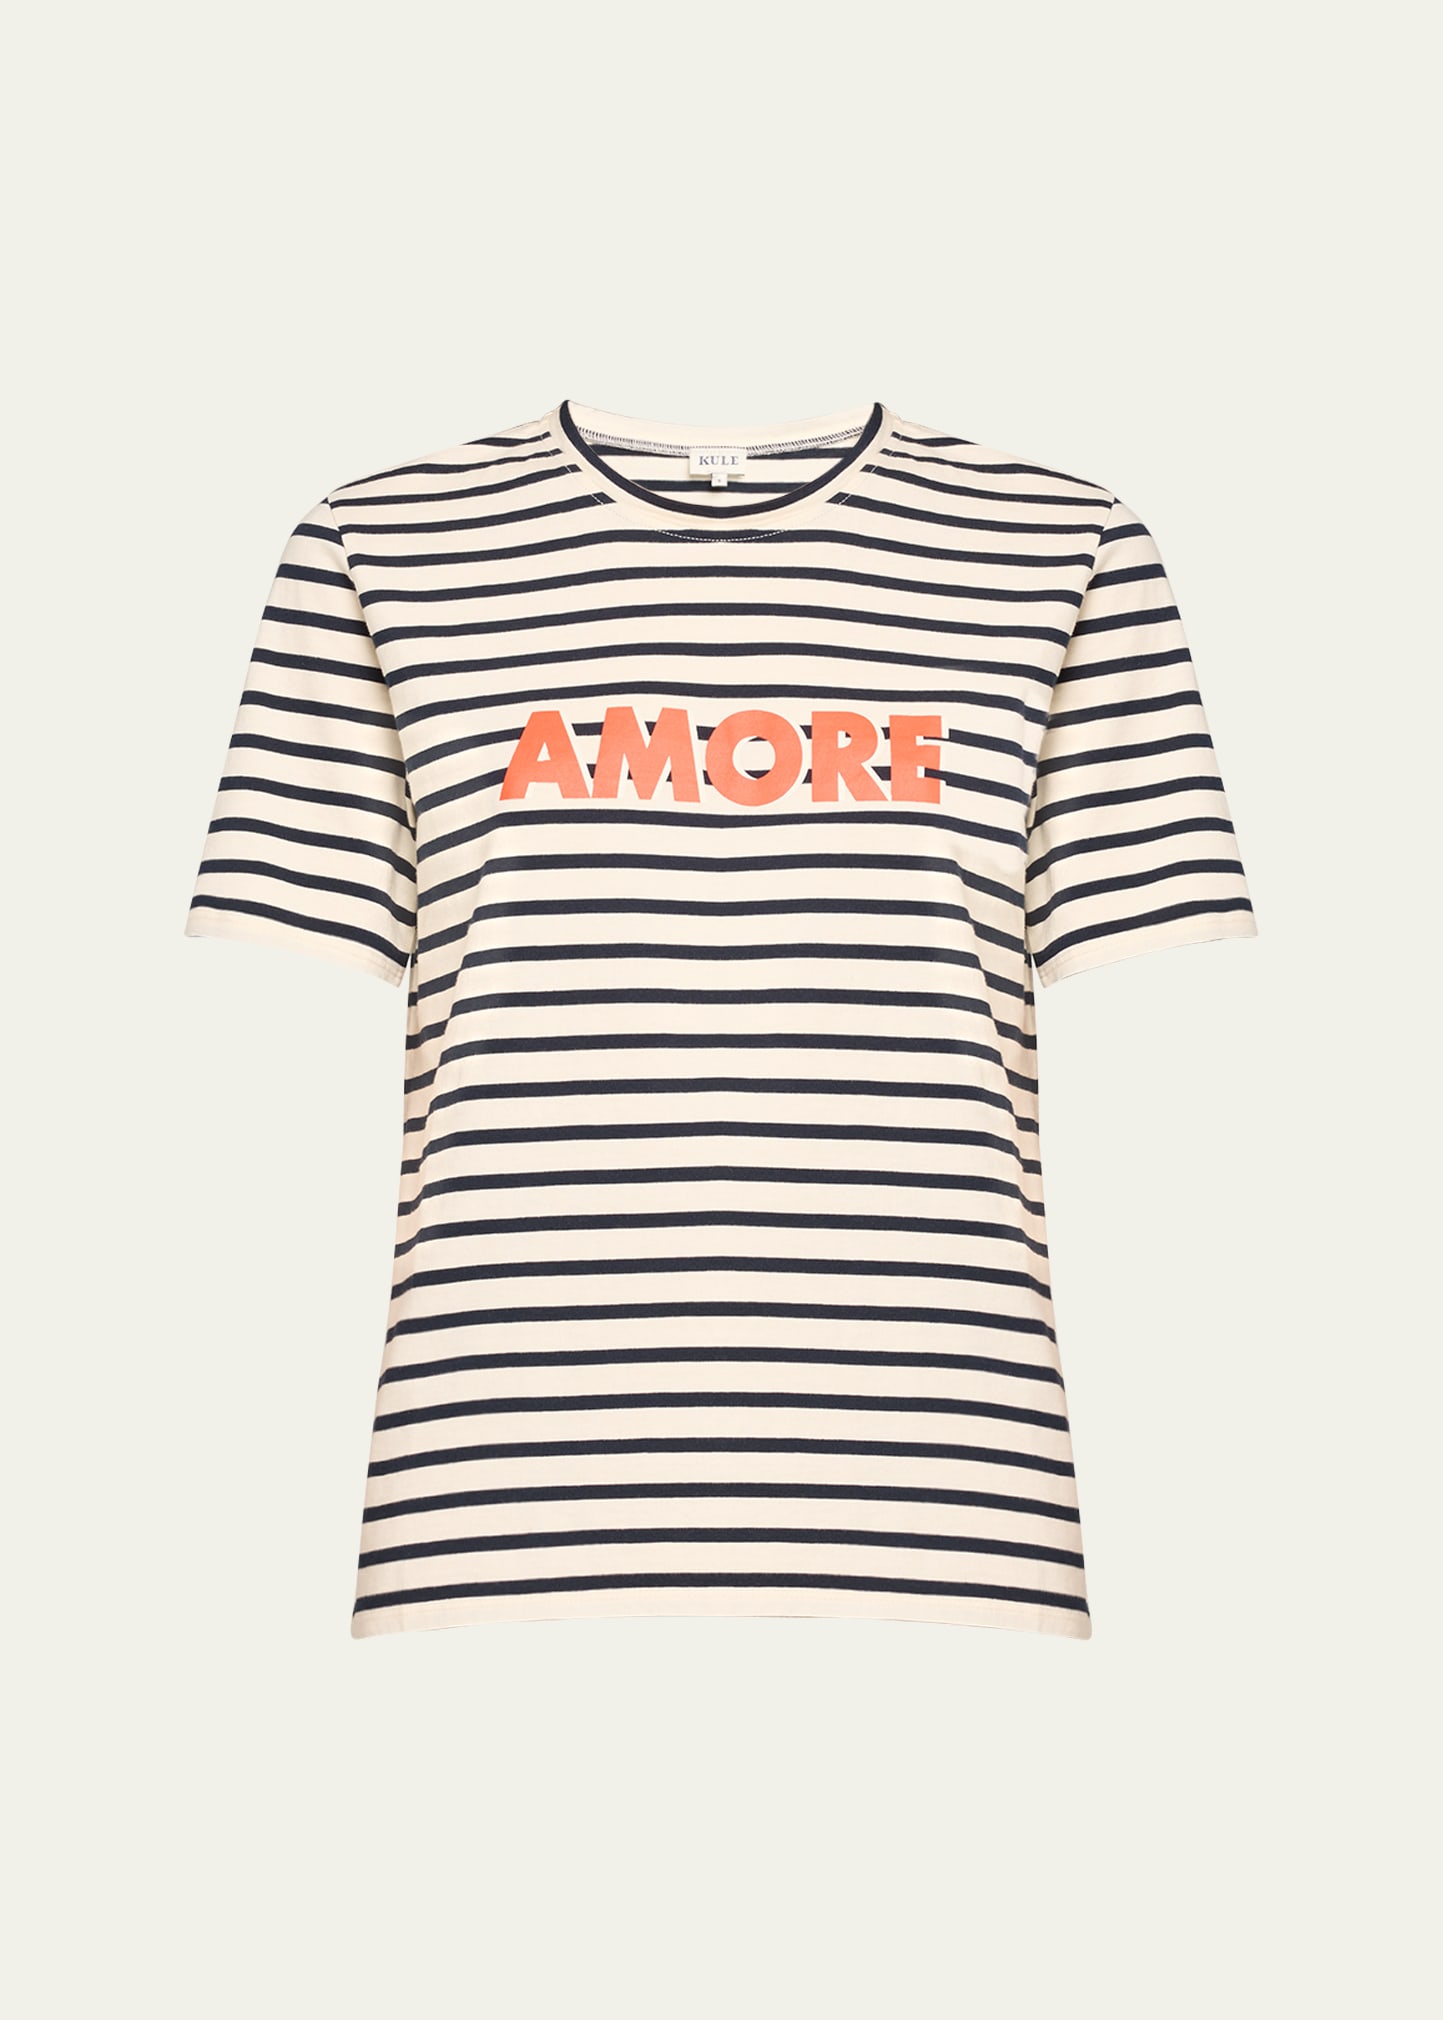 The Modern Amore Short-Sleeve Cotton T-Shirt